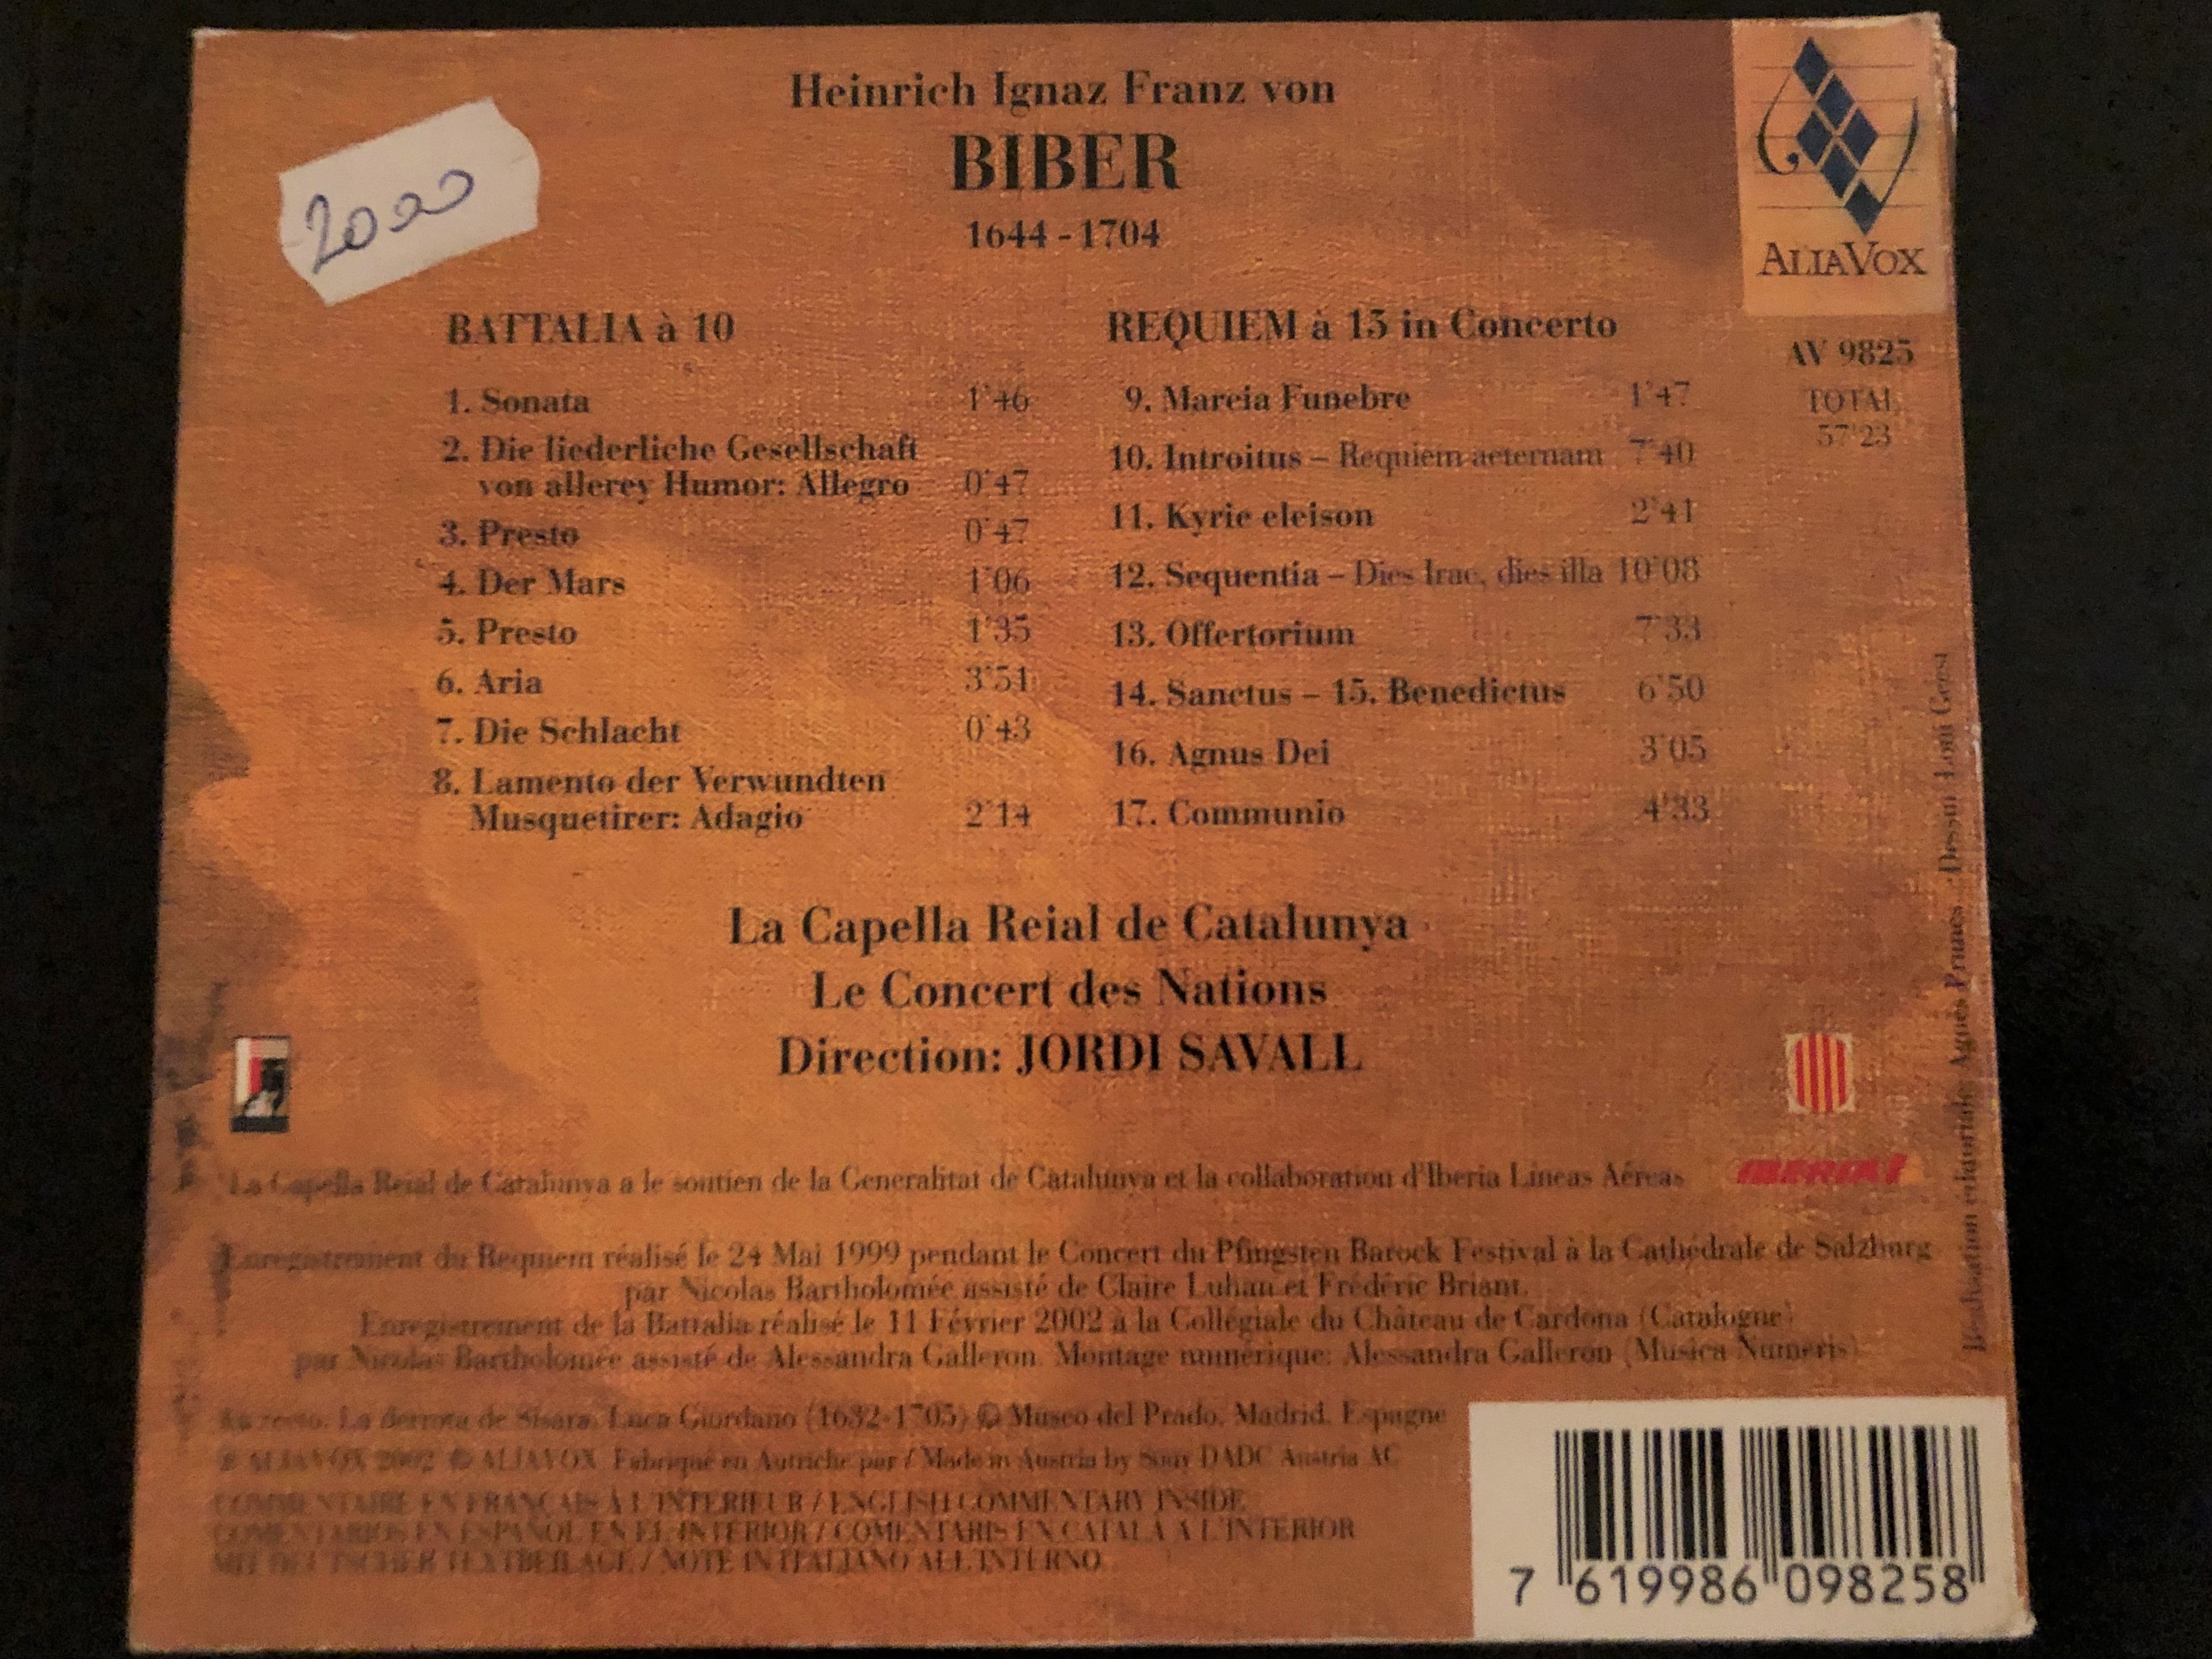 heinrich-ignaz-franz-von-biber-battalia-10-requiem-15-in-concerto-la-capella-reial-de-catalunya-le-concert-des-nations-jordi-savall-alia-vox-audio-cd-2002-av-9825-19-.jpg